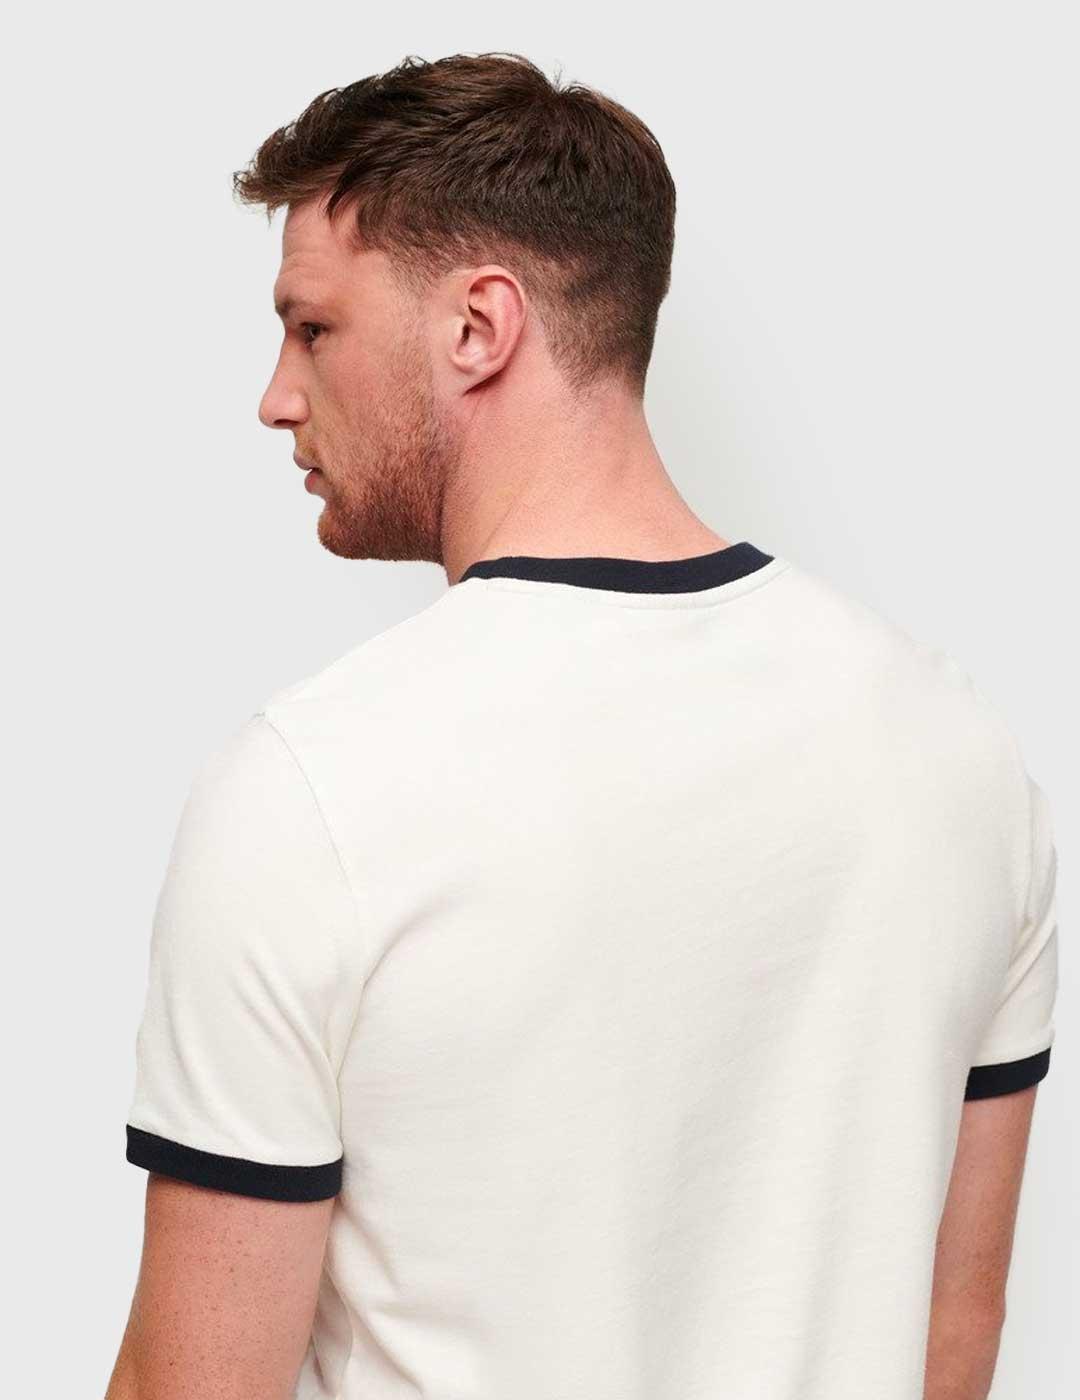 Camiseta Superdry Ringer Workwear Graphic blanca para hombre